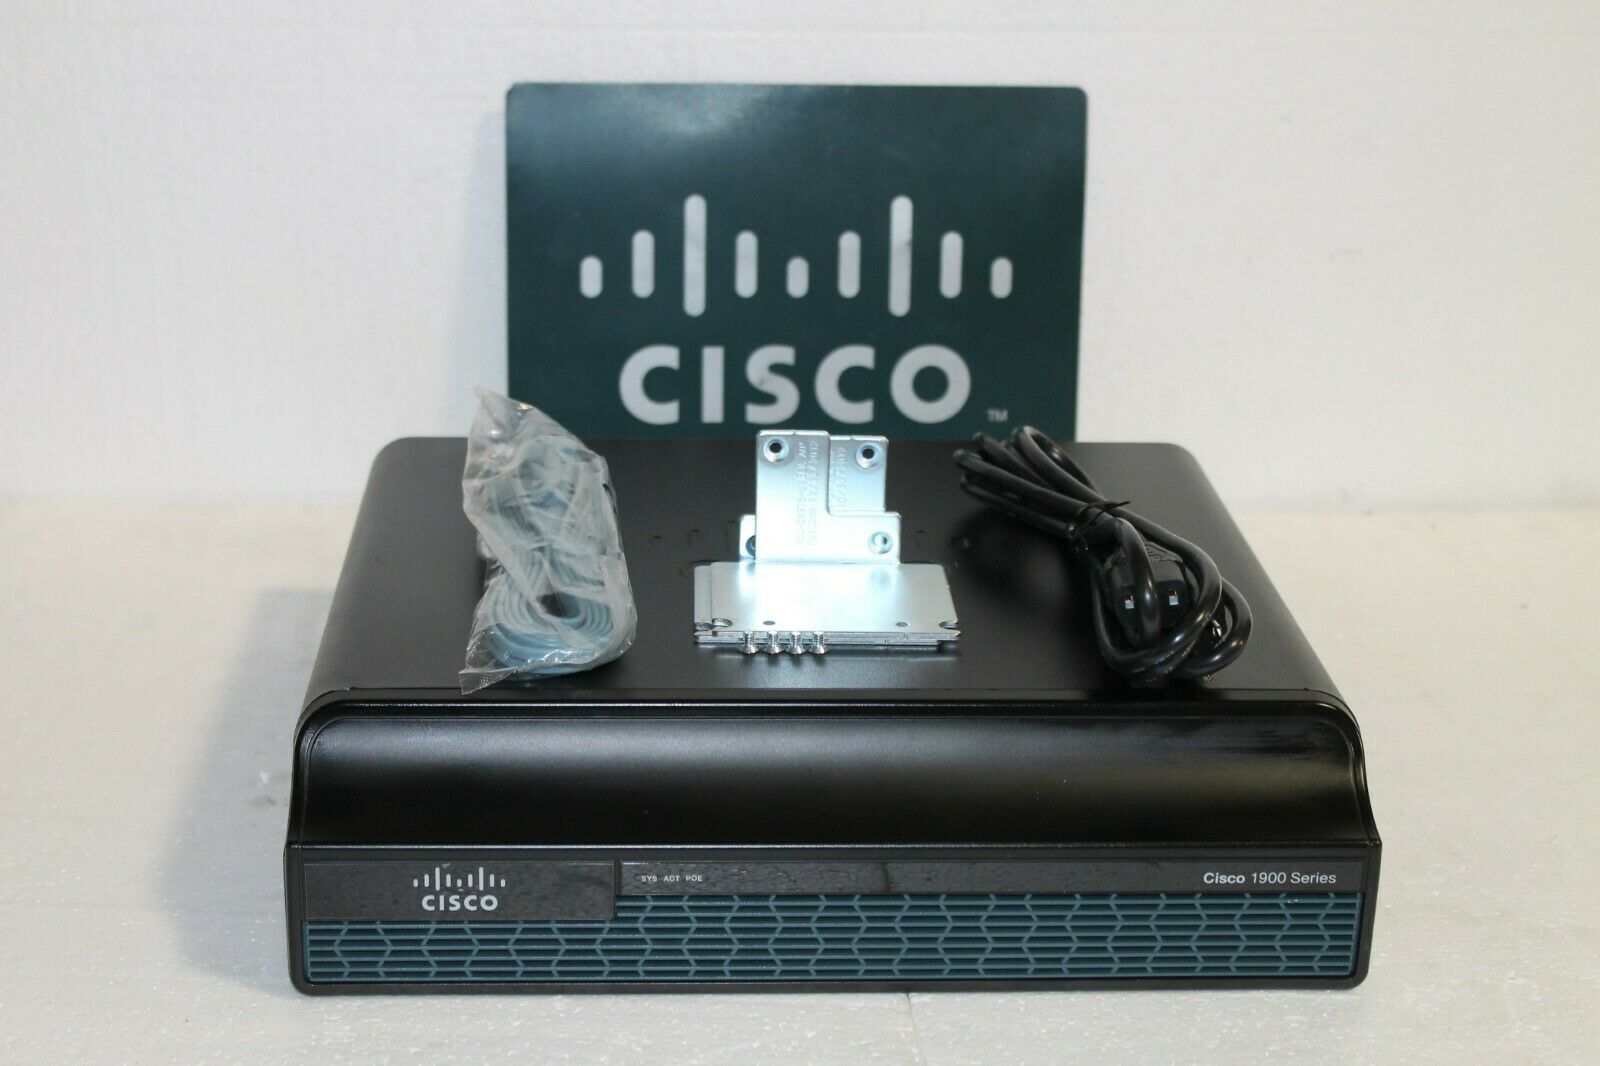 Cisco Cisco1941-/k9 2-port + 2 Ehwic Slots Gigabit Ethernet Router Ip Base Mw